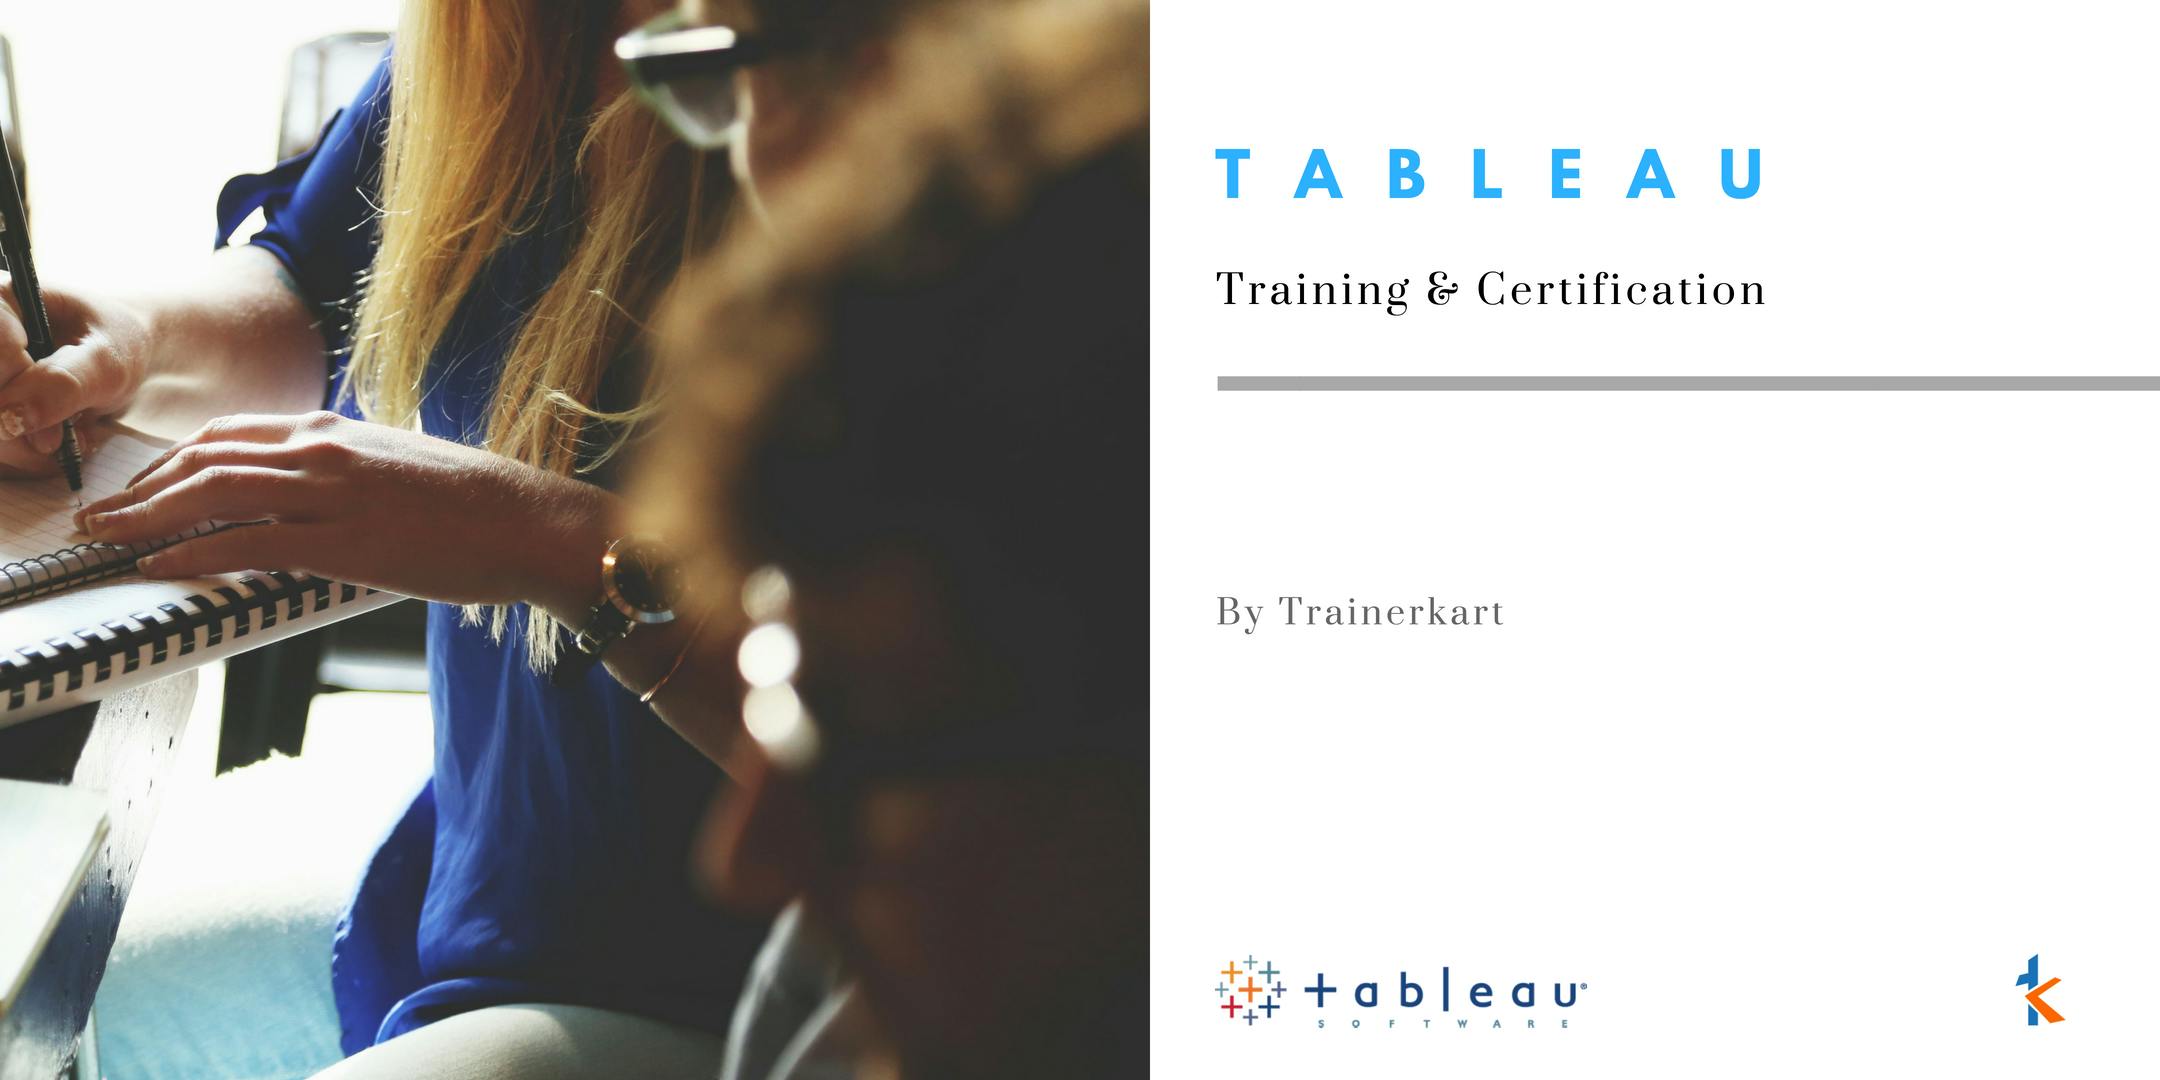 Tableau Training & Certification in West Palm Beach, FL